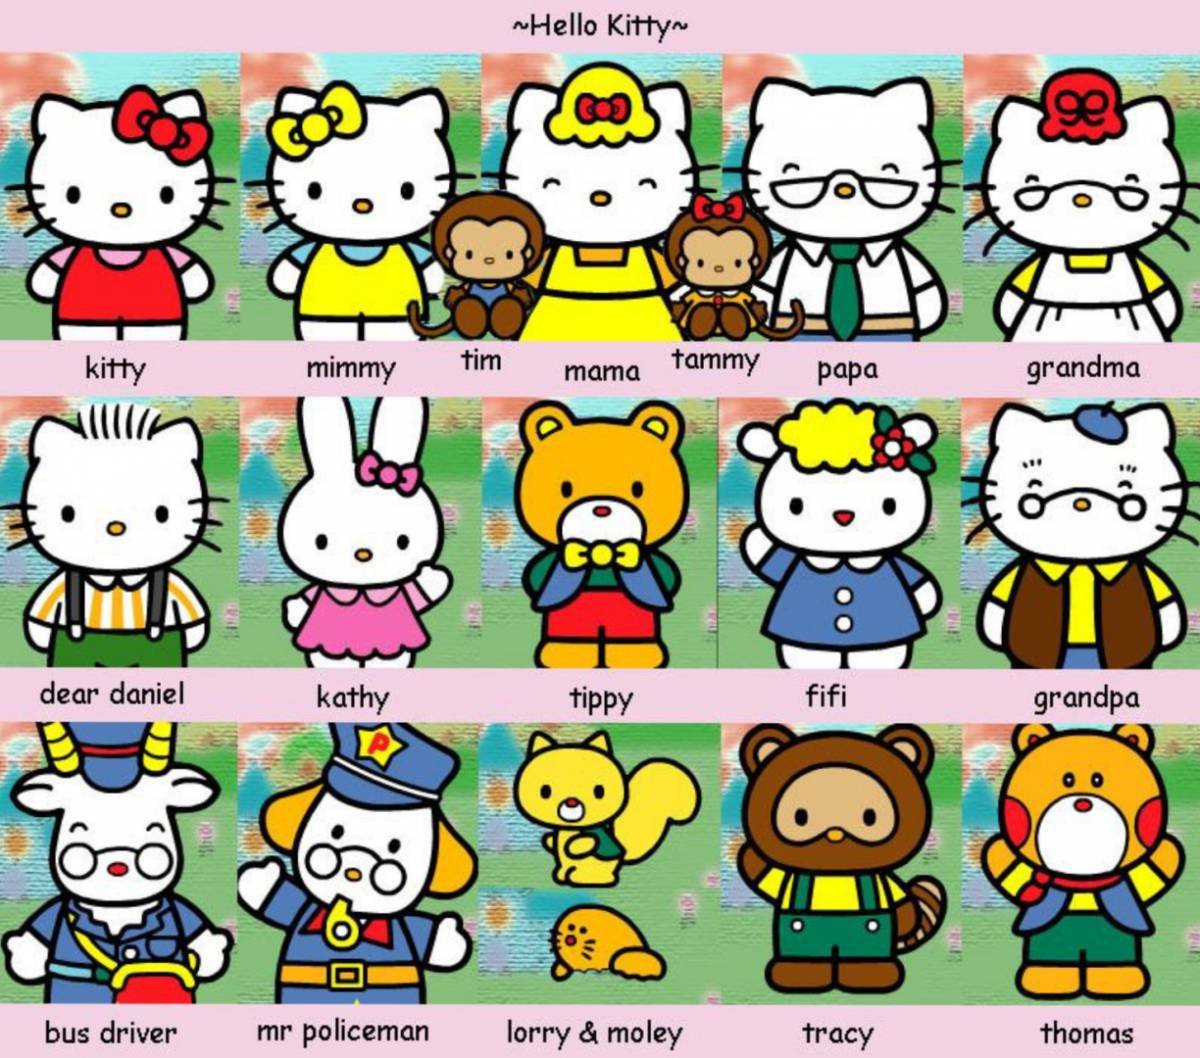 Sanrio characters. Хеллоу Китти и их имена. Хелло Китти и ее друзья имена. Хелло Китти и ее друзья лица персонажей. Хэллоу Китти имена всех персонажей.